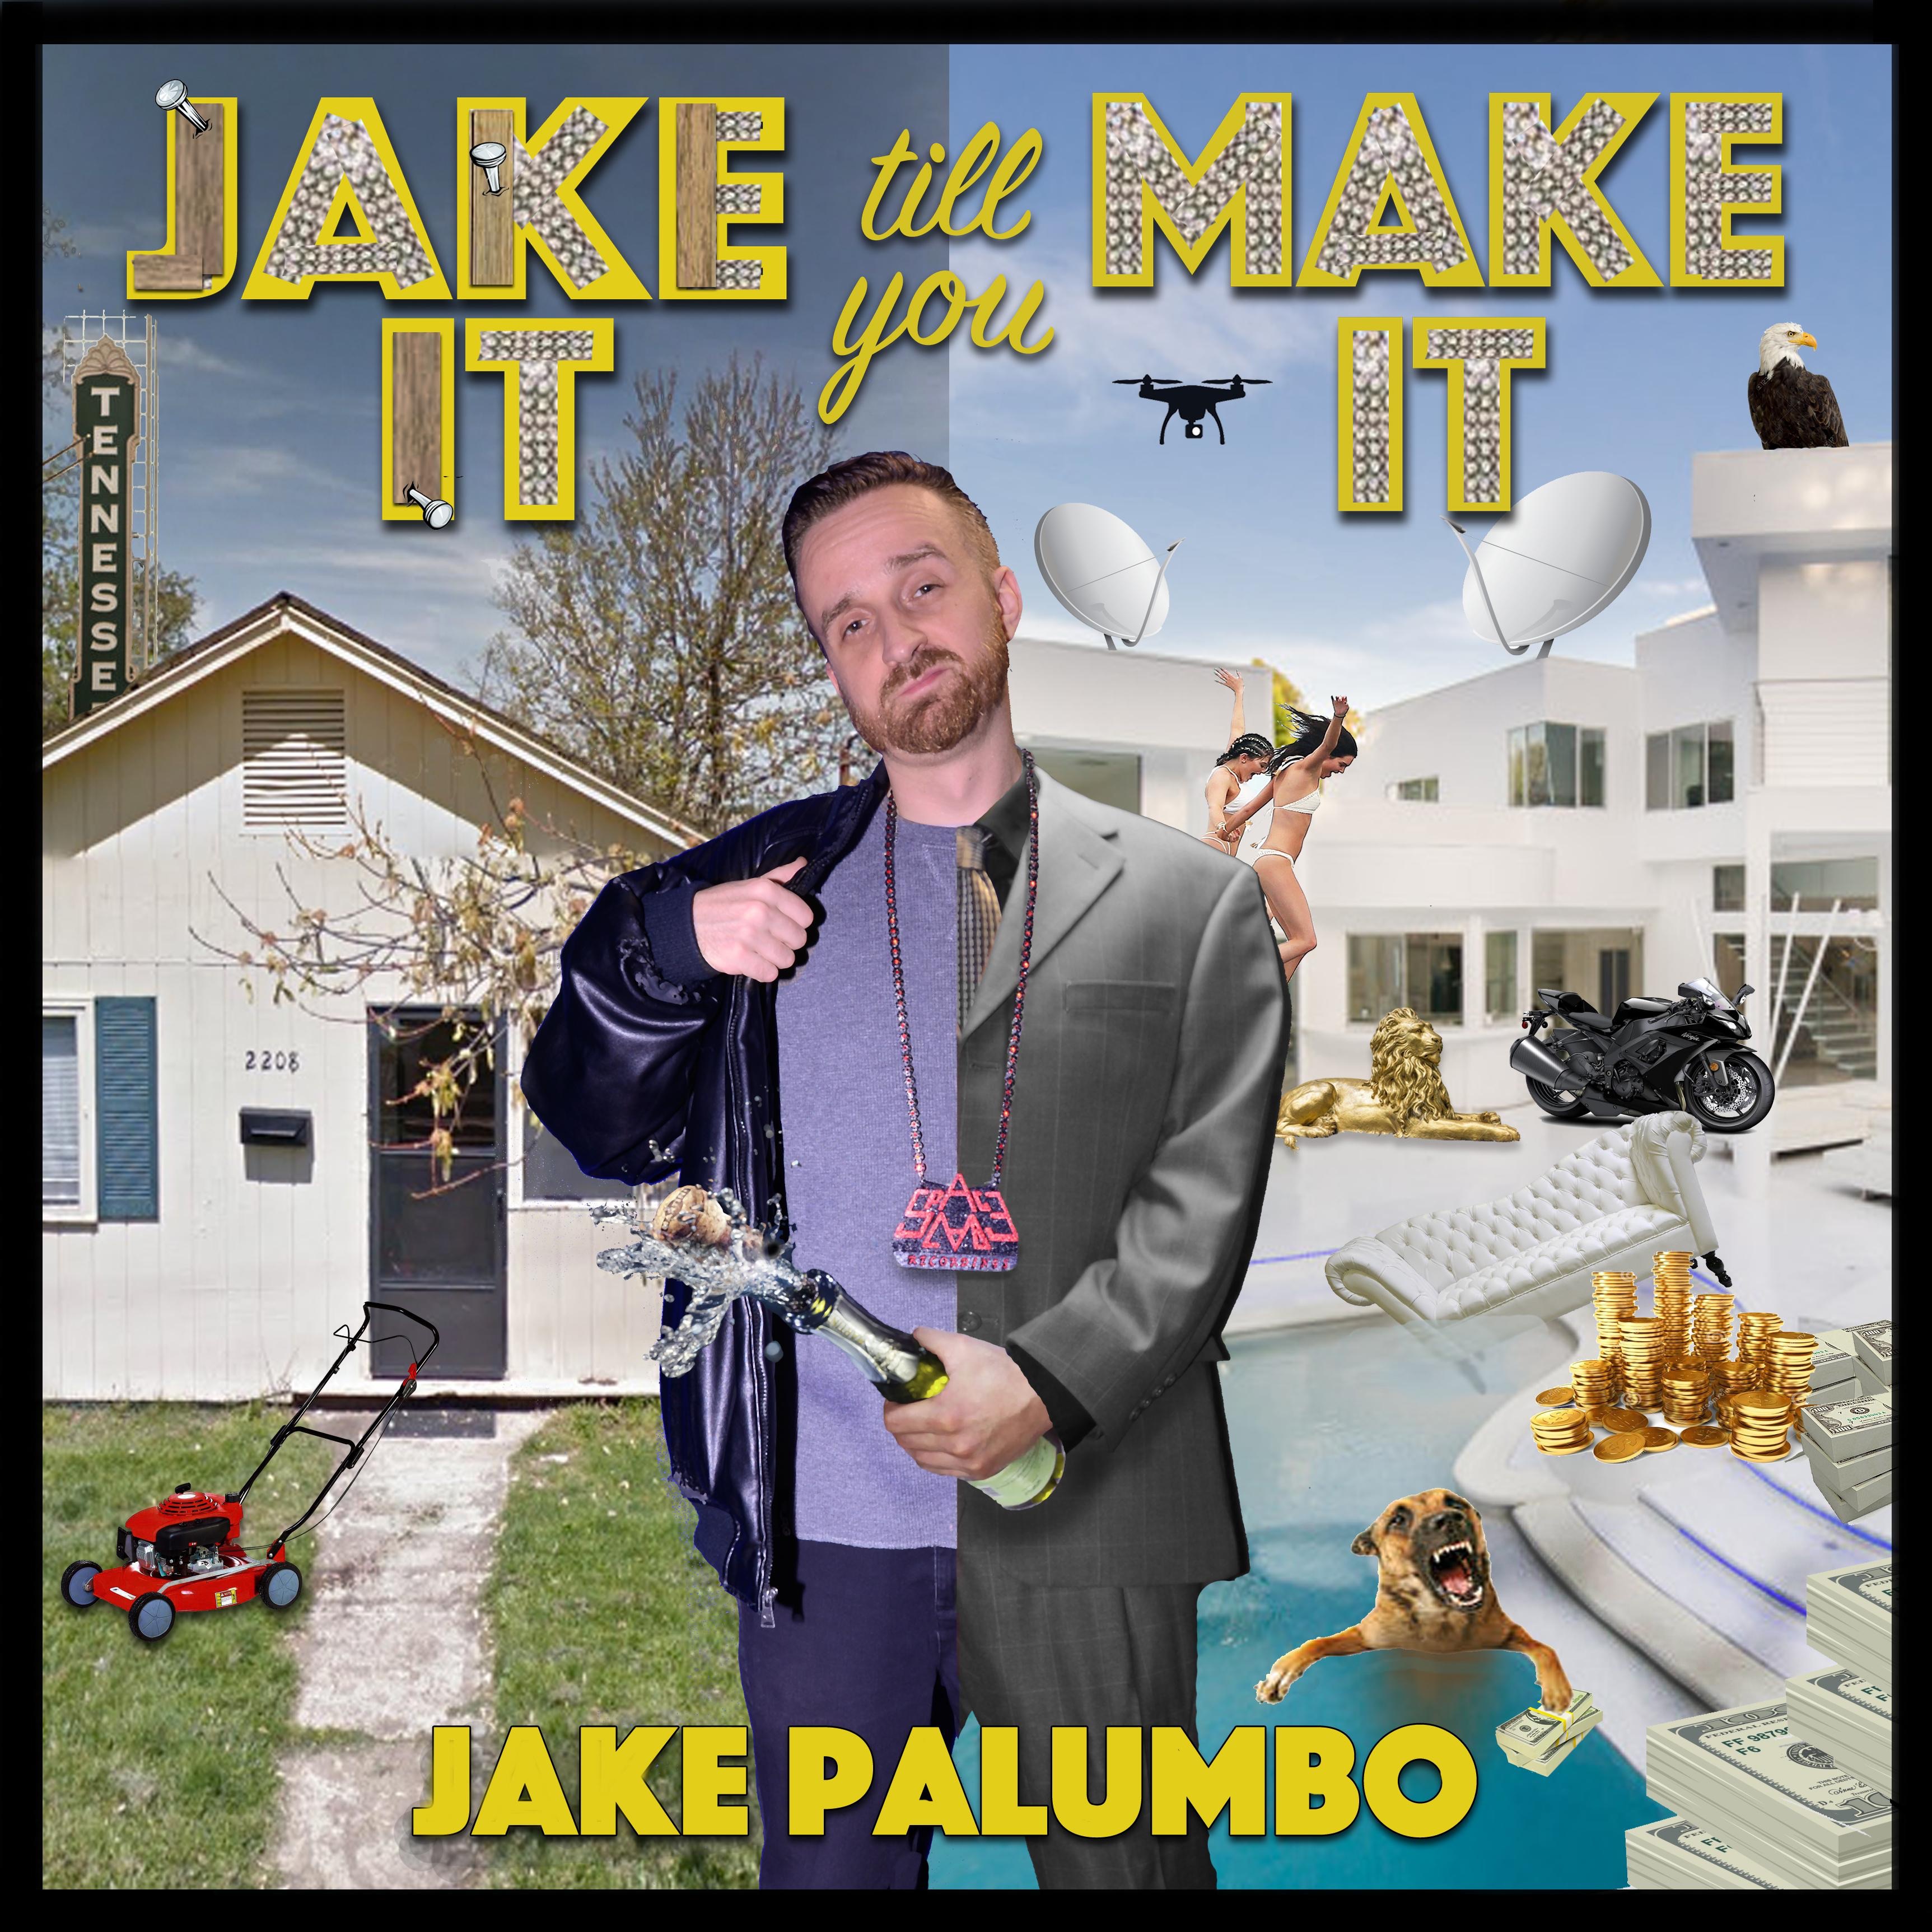 Jake Palumbo - Exoskeleton ft. Ruste Juxx & Tek